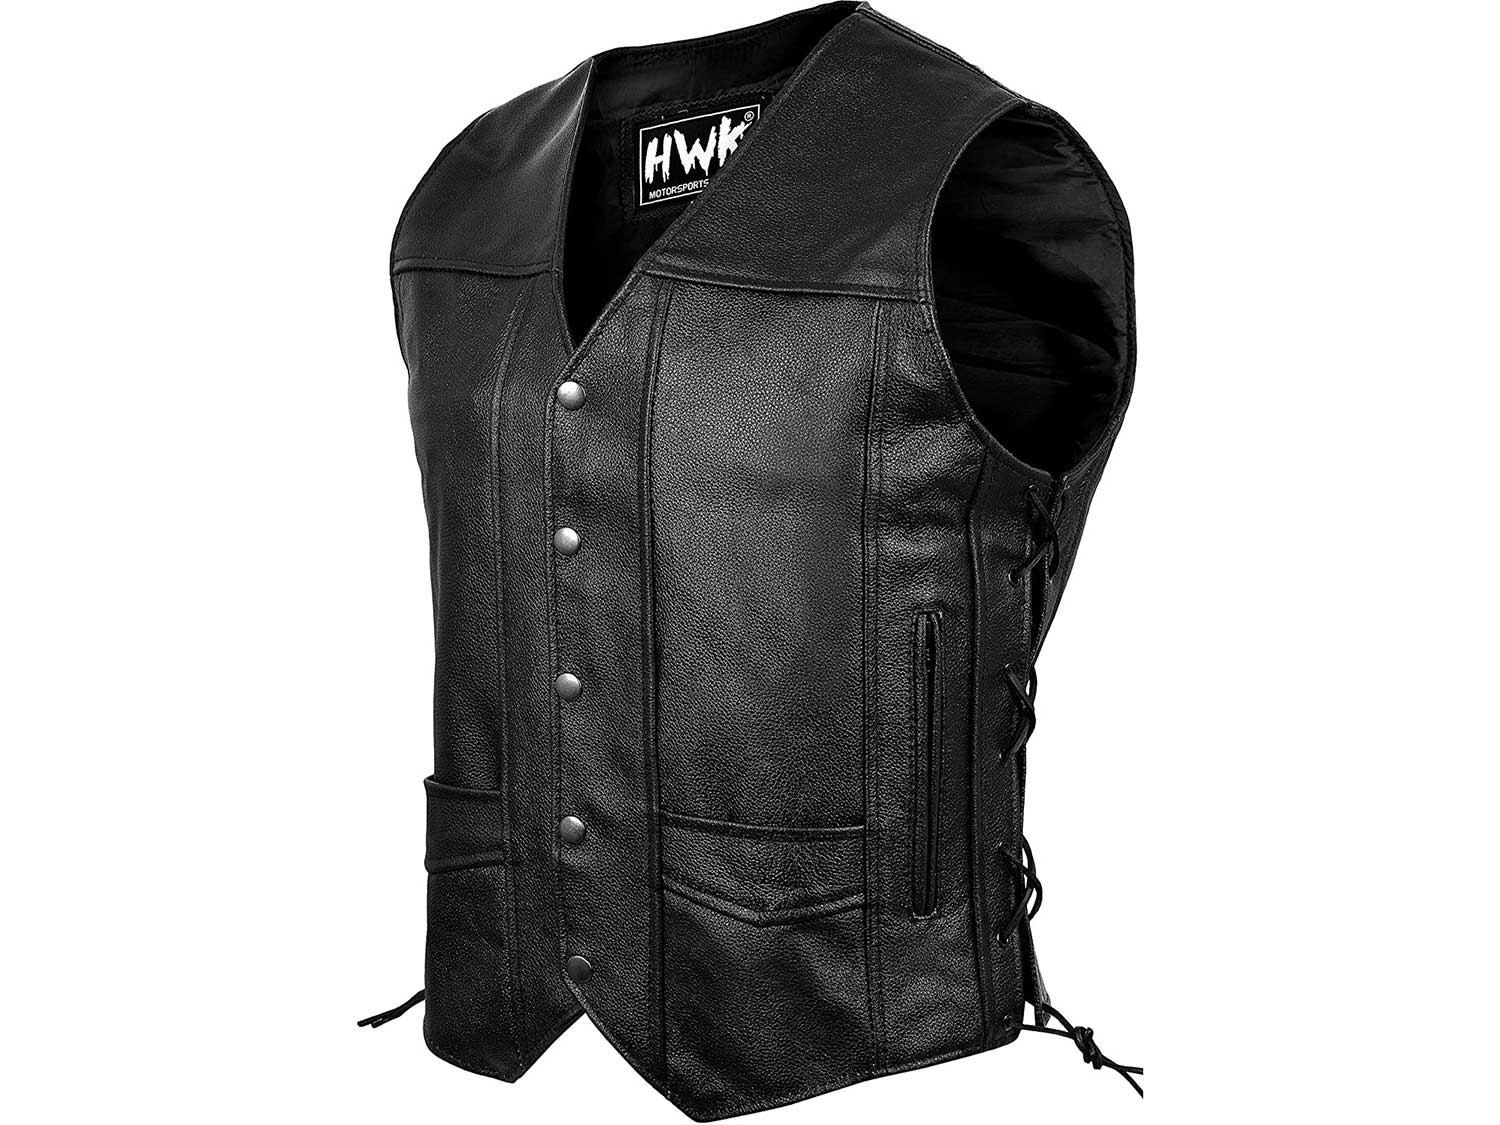 Leather Motorcycle Vest For Men Black Classic Vintage Club Riding Biker Vests With Concealed Gun Pocket (XL)